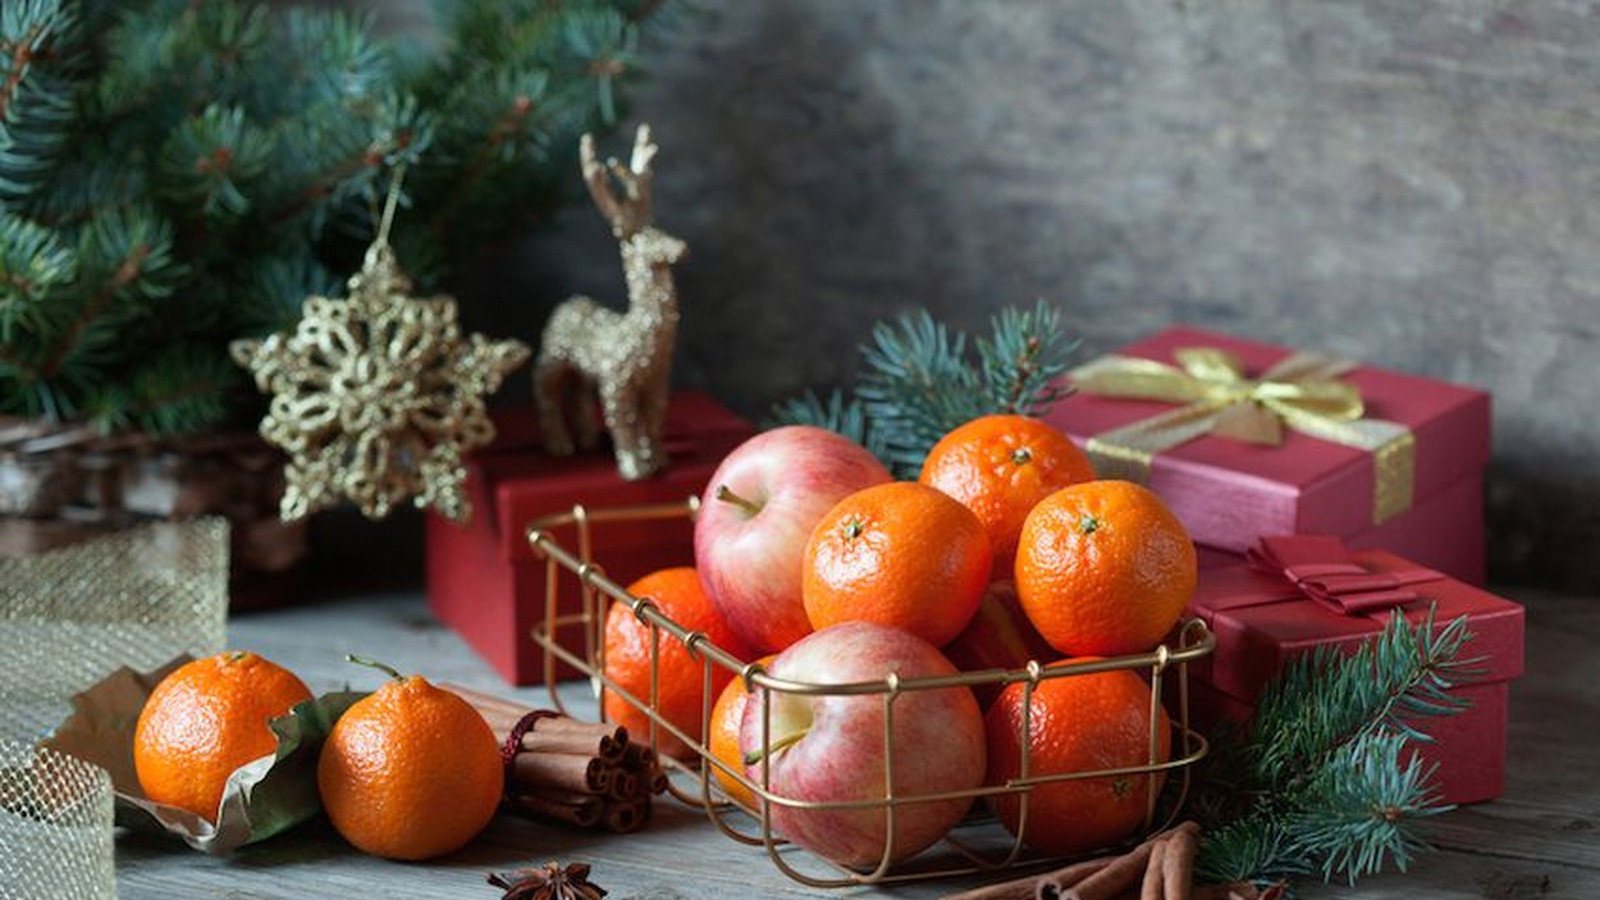 Food Christmas Gift Ideas
 14 Healthy & Useful Christmas Gift Ideas